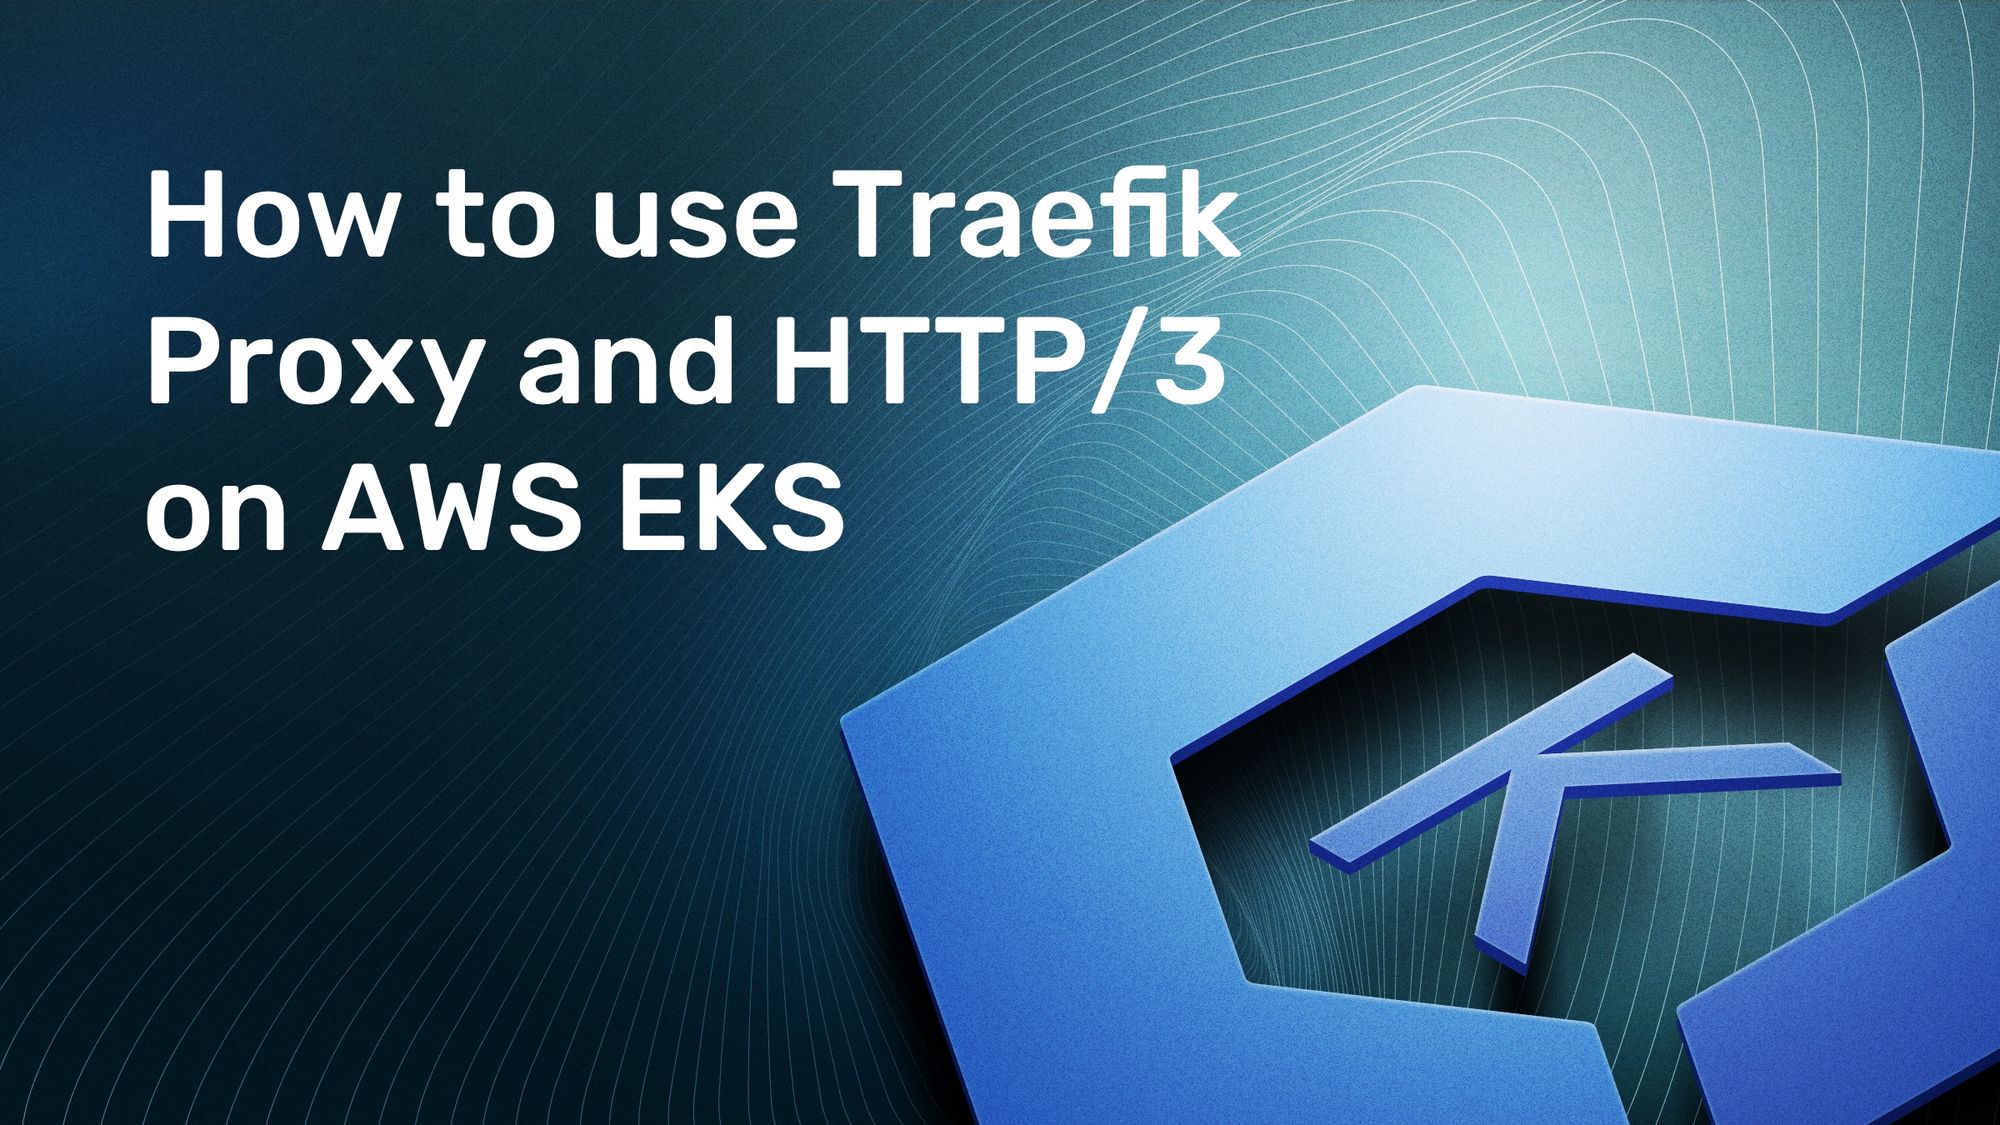 traefik proxy and http3